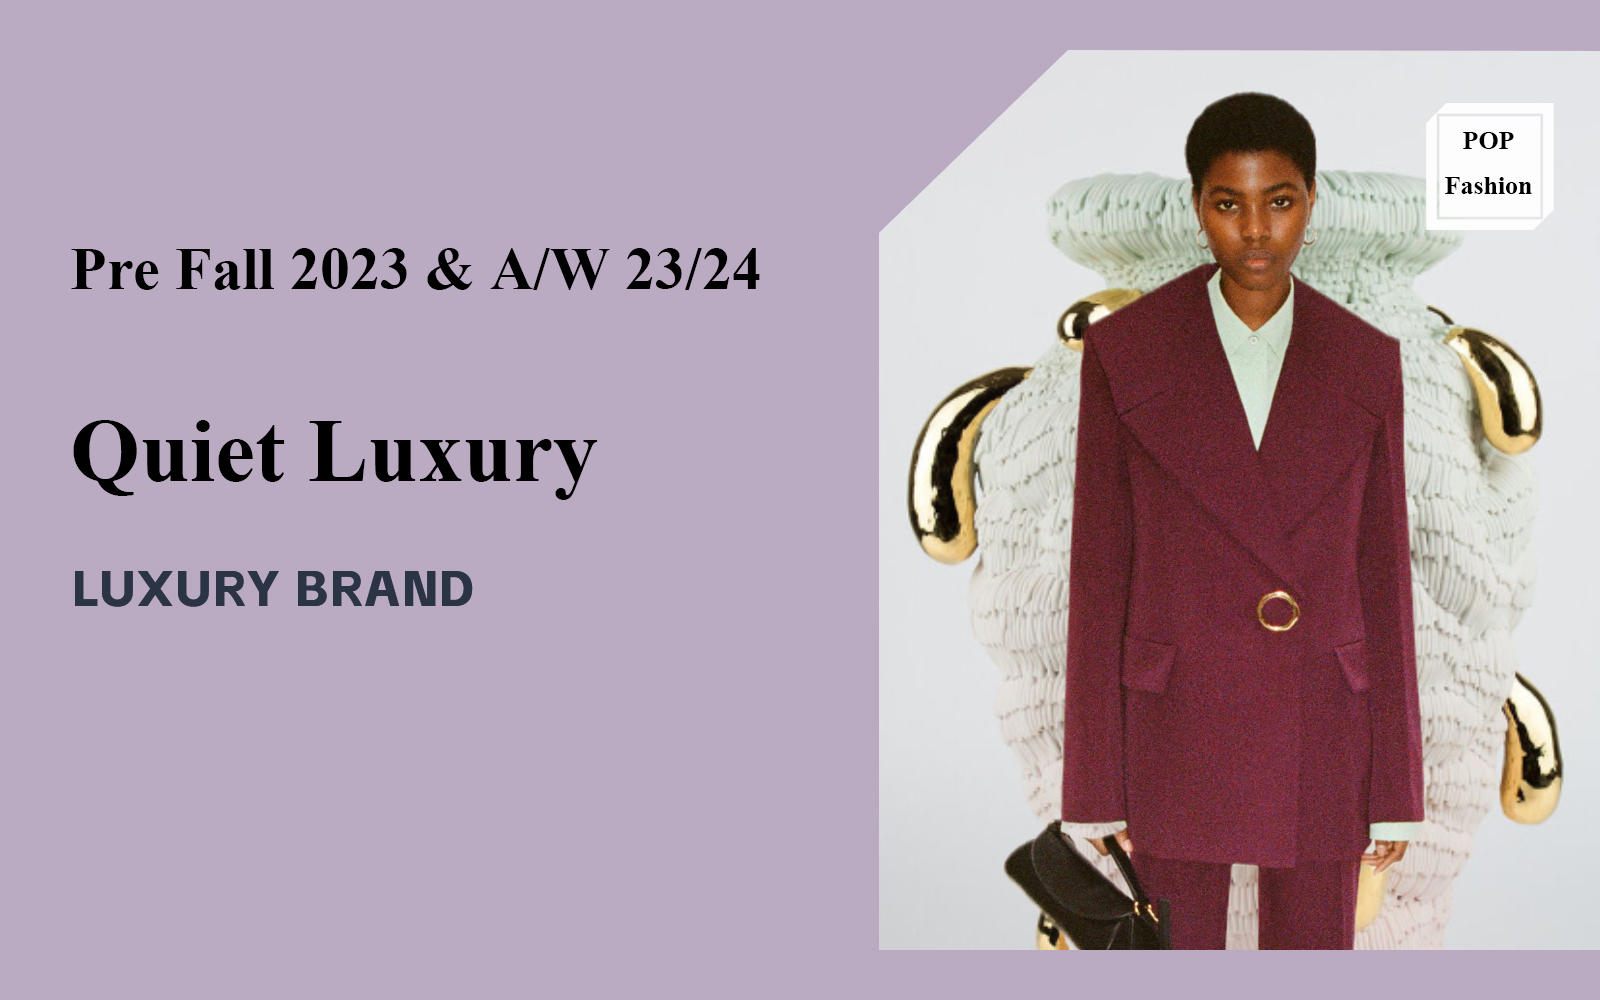 Quiet Luxury -- The Comprehensive Analysis of Luxury Brand